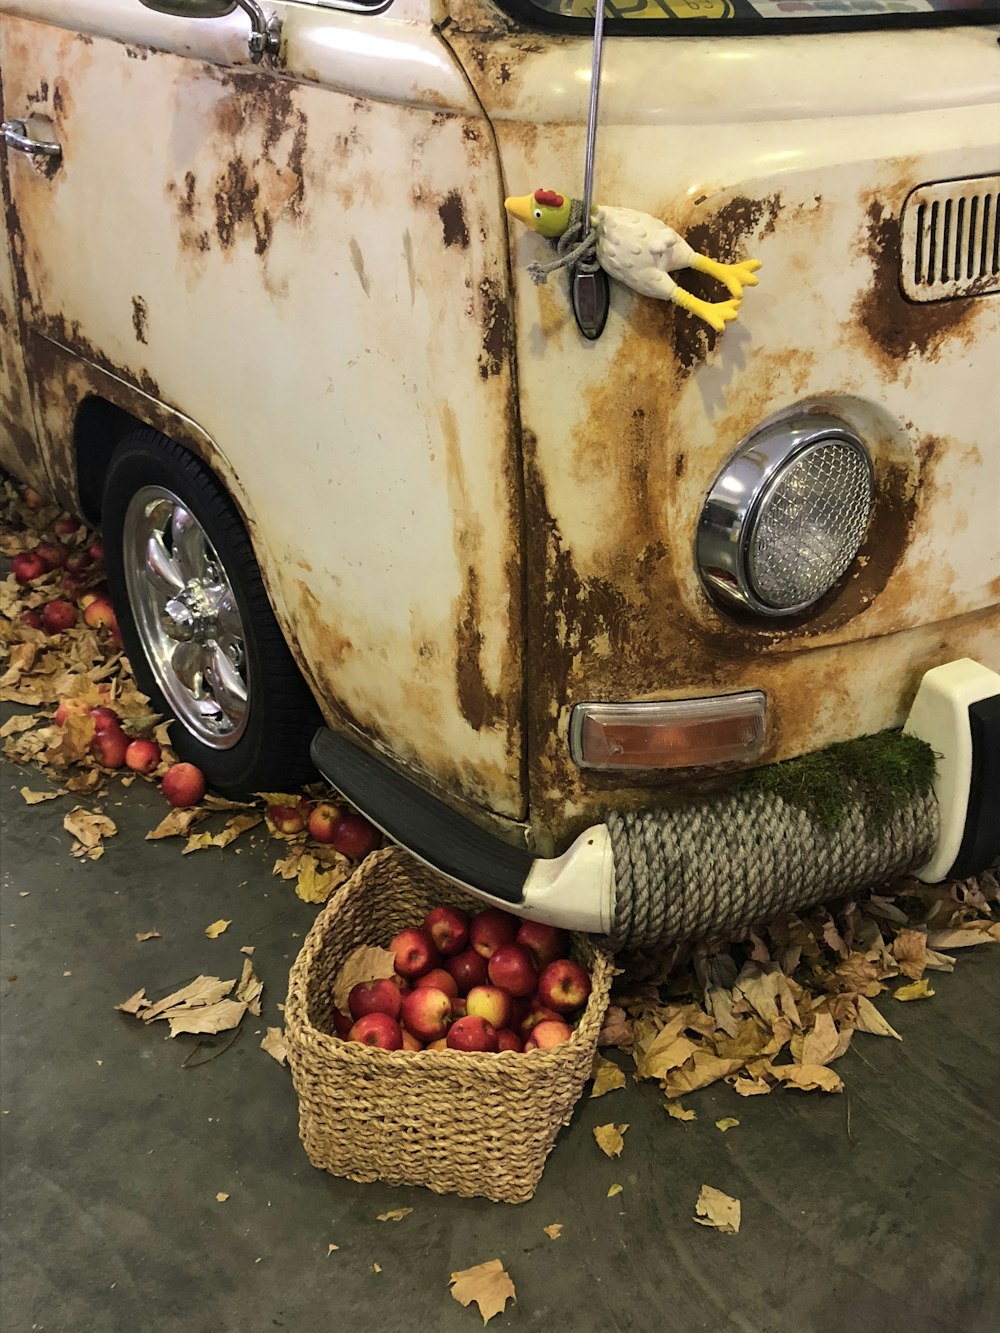 apples in brown woven basket under white van